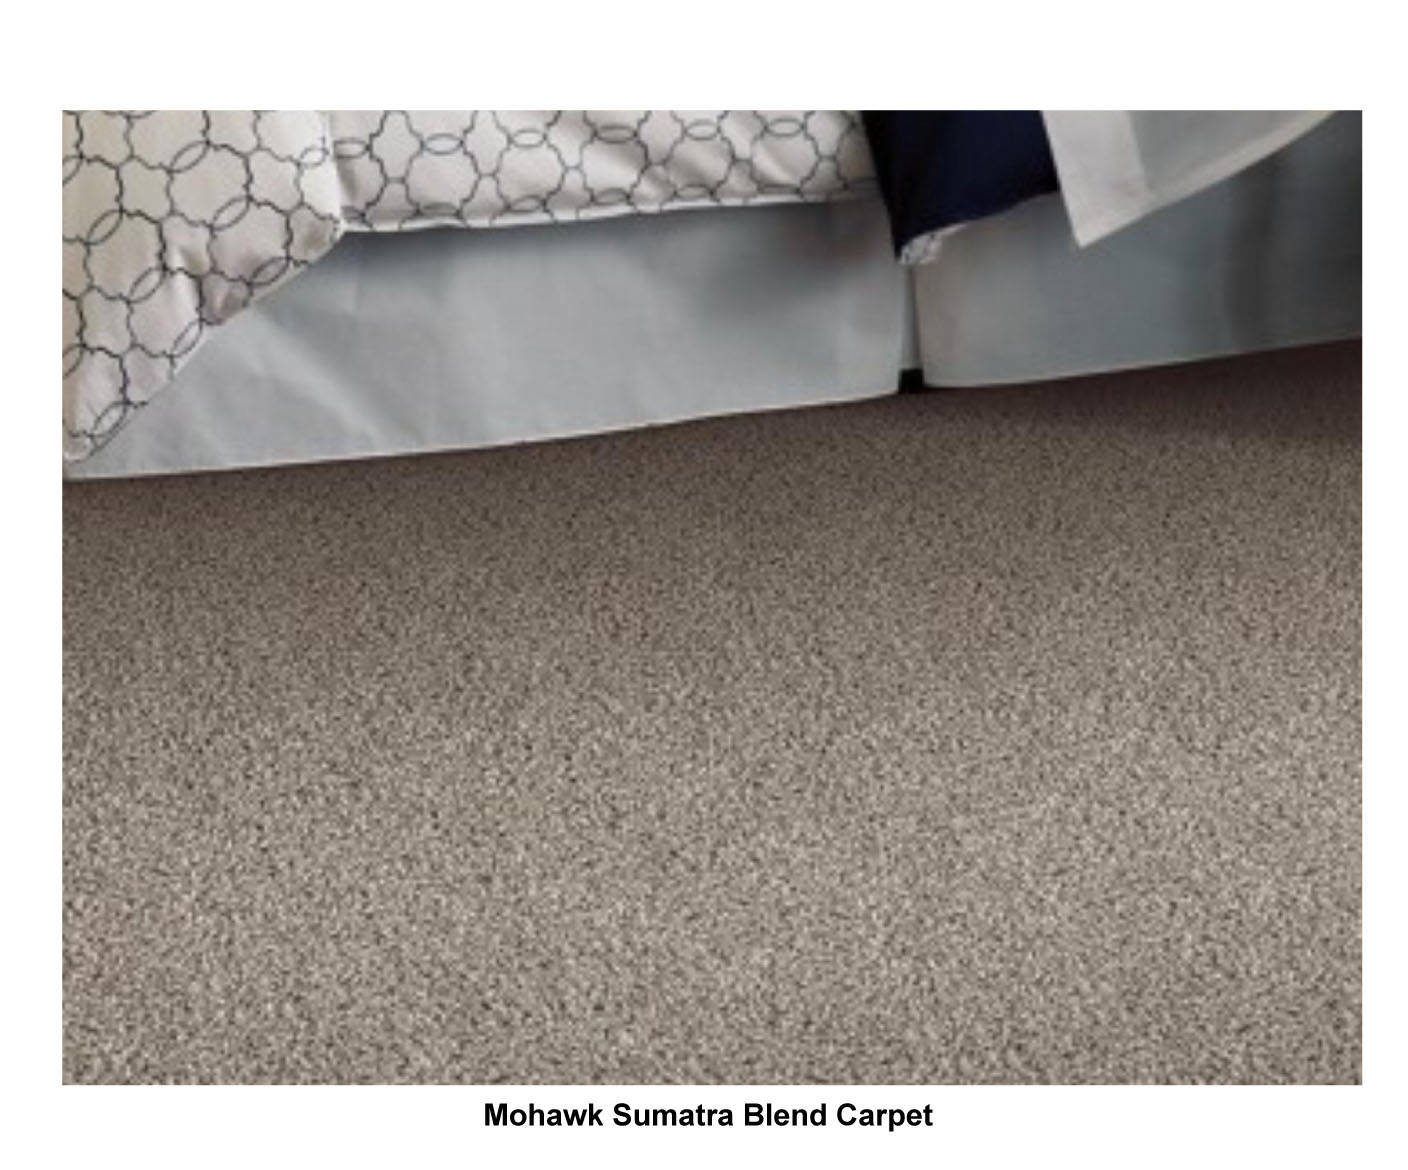 Mohawk Sumatra Blend Carpet